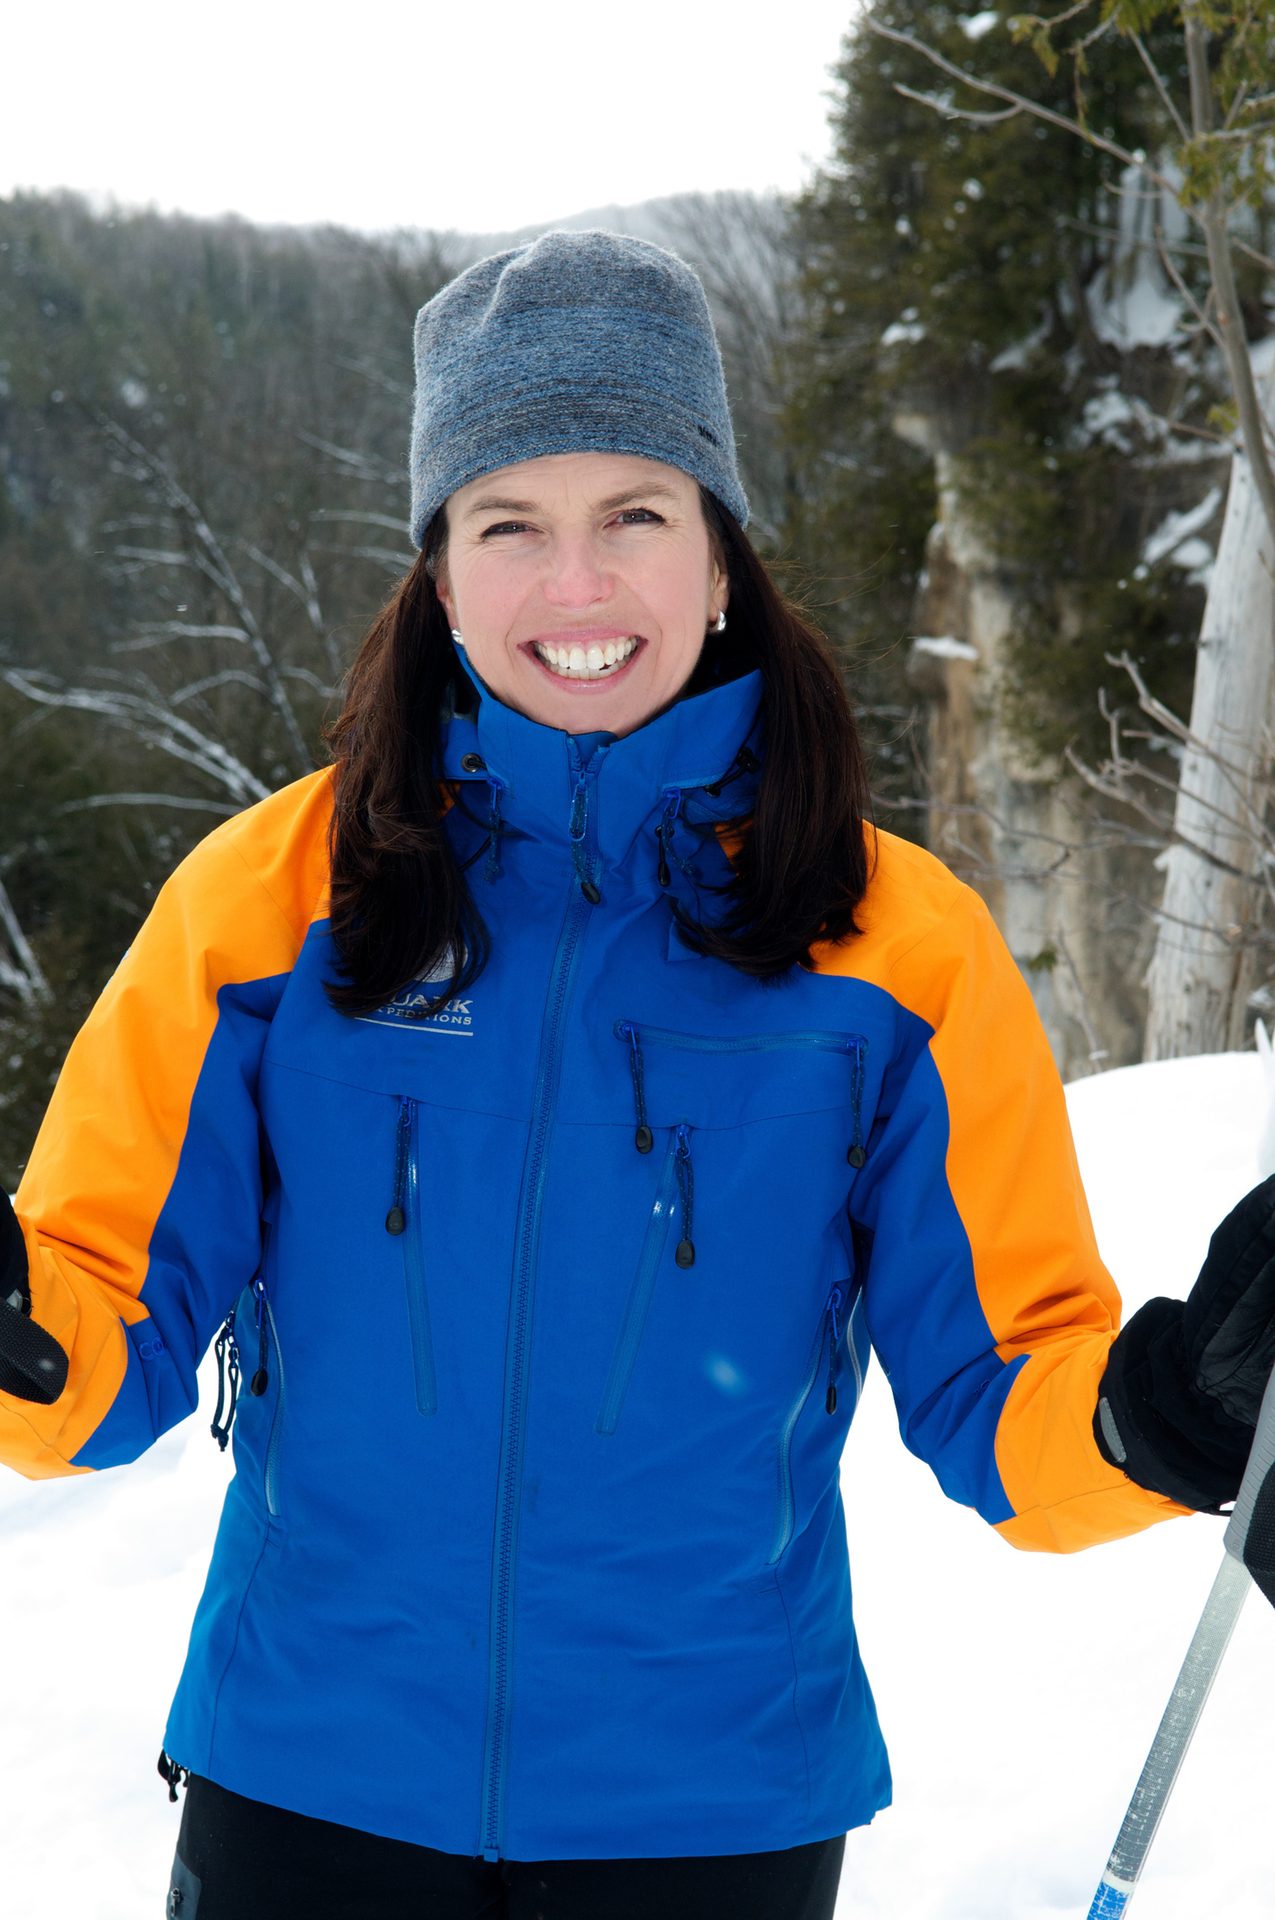 Human body, Outdoor recreation, Smile, Snow, Glove, Tree, Sleeve, Gesture, Freezing, Jacket